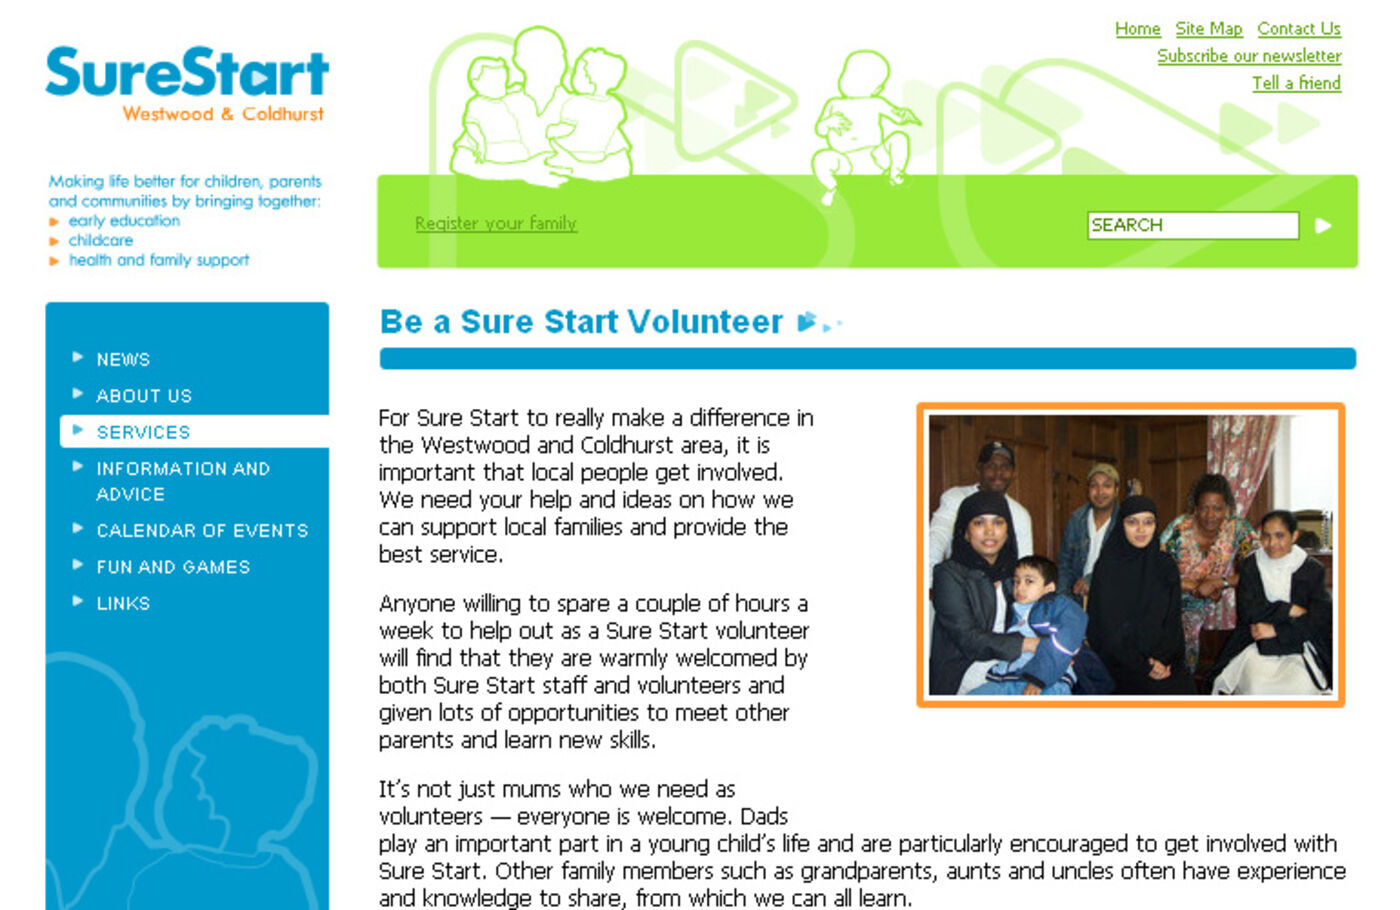 Sure Start Westwood & Coldhurst Service - SureStart